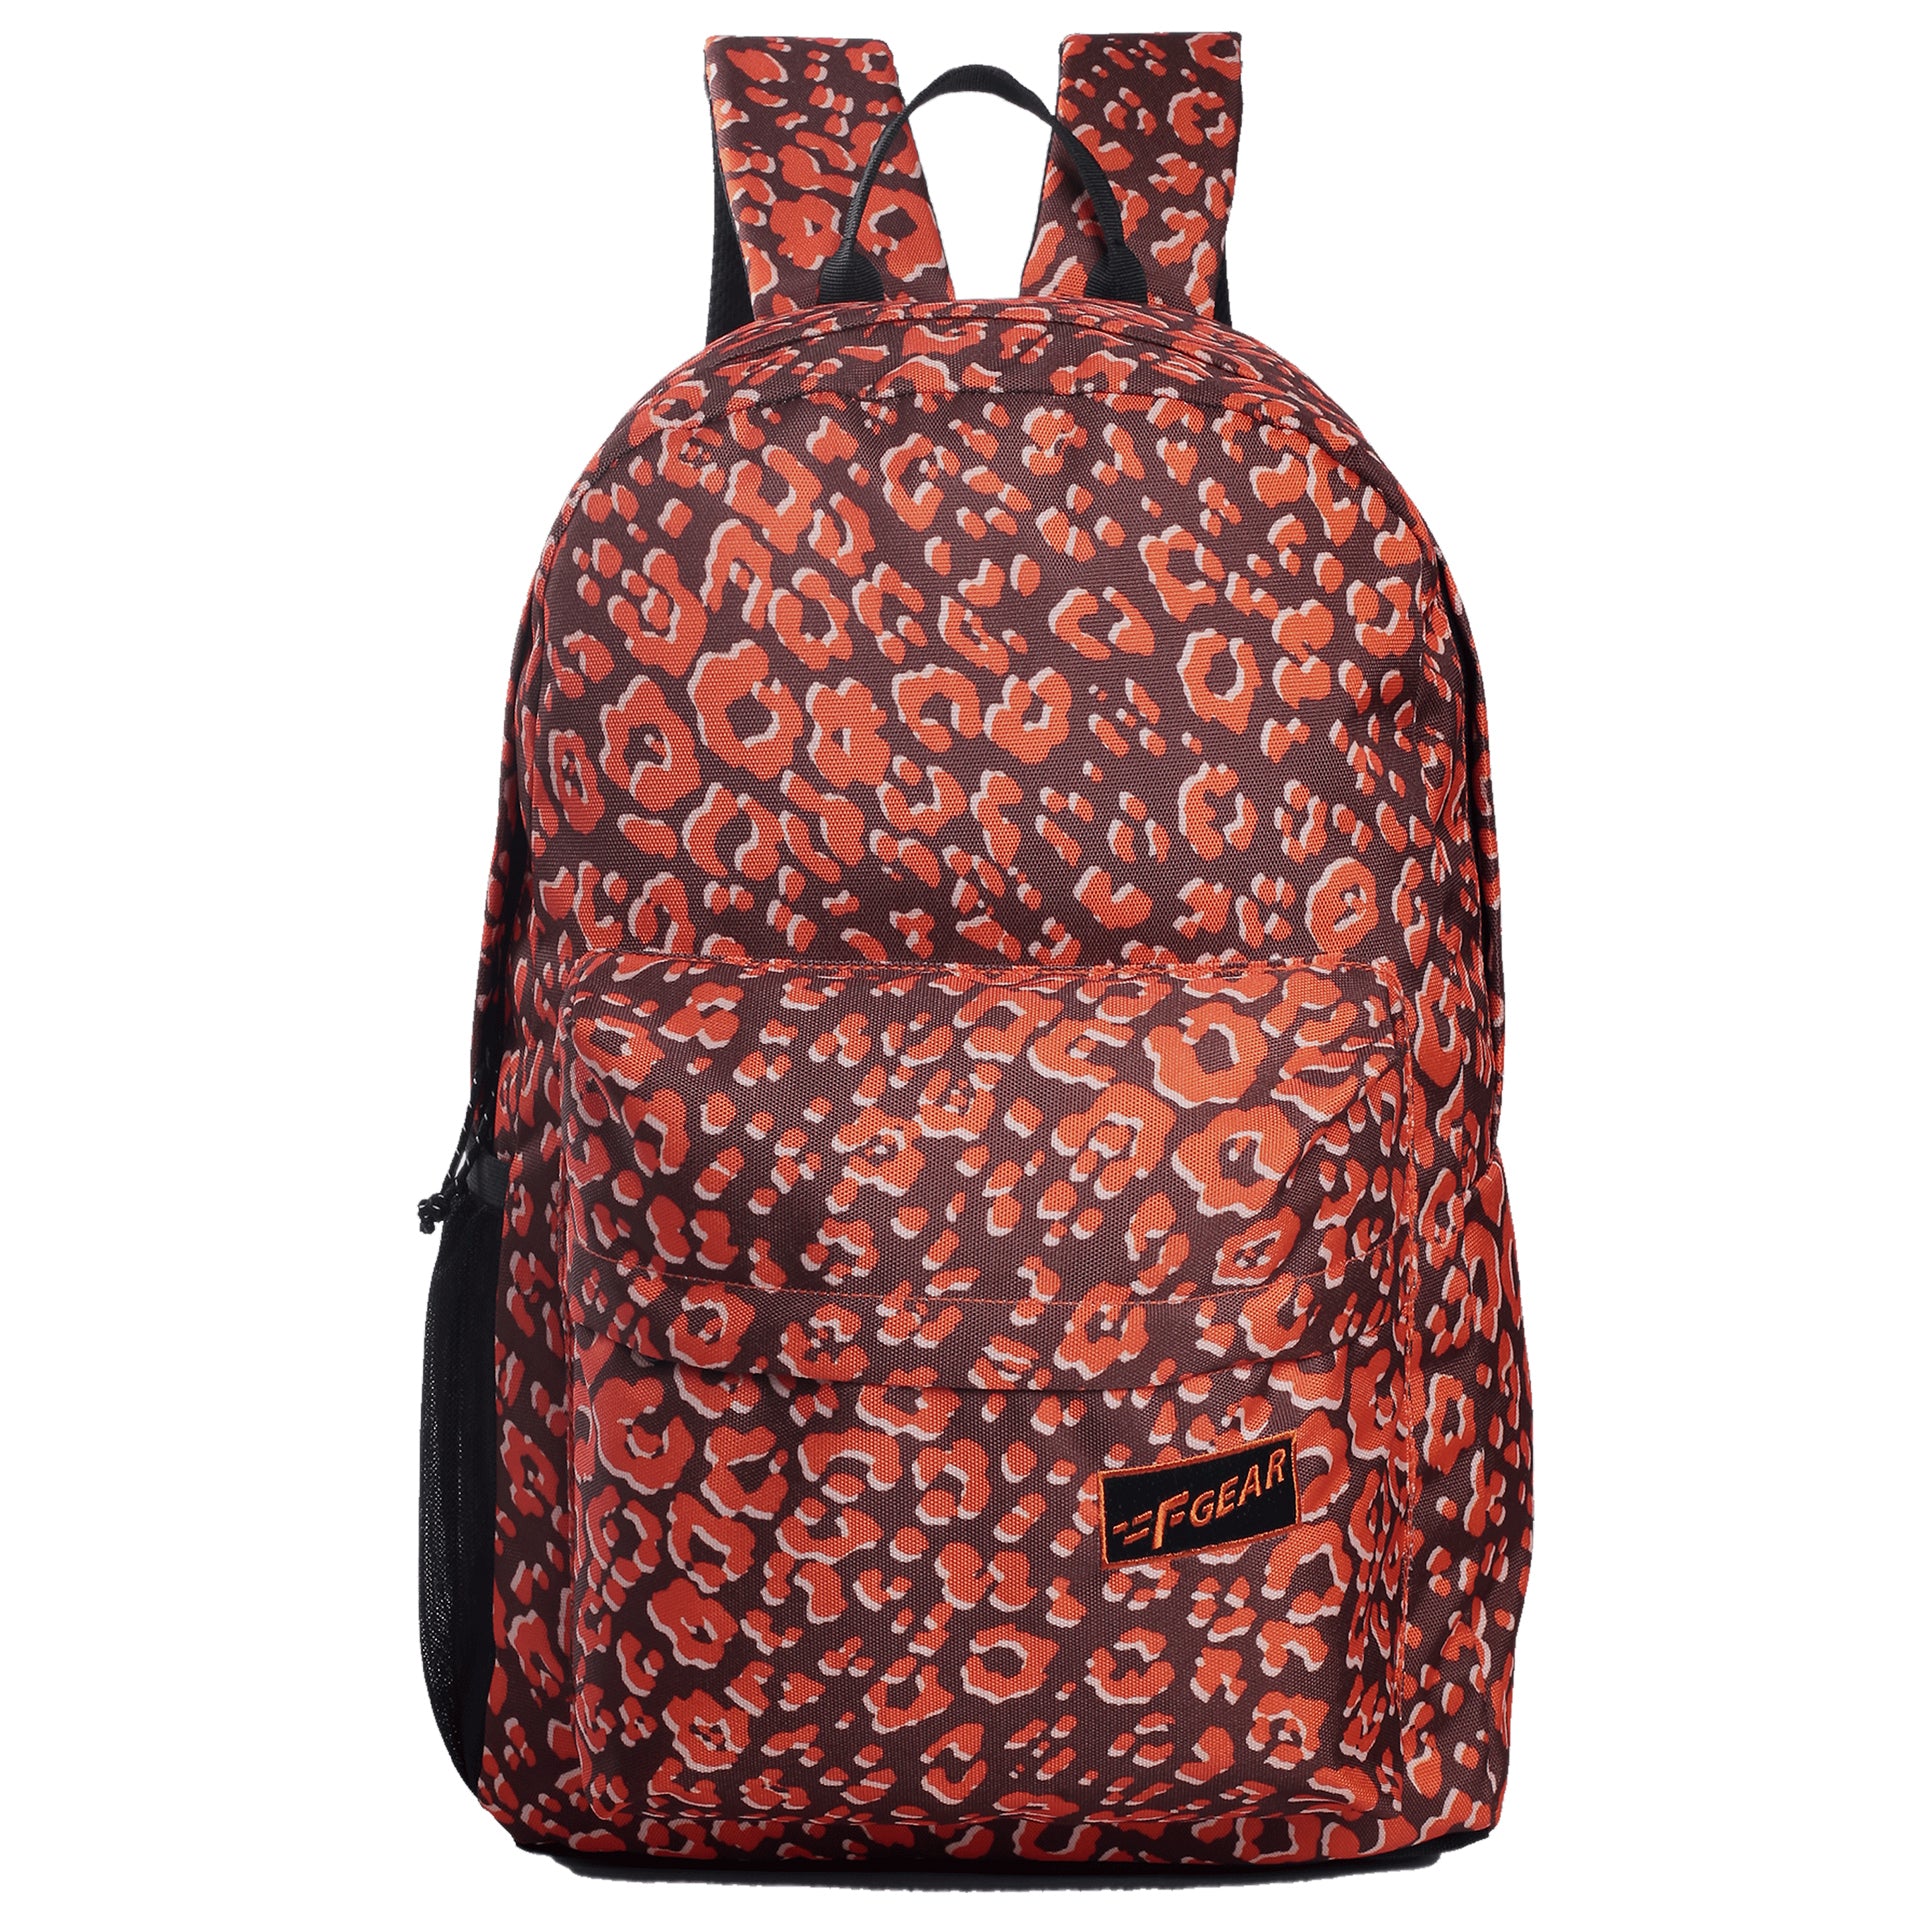 Shiraleah Ezra Quilted Nylon Backpack, Orange